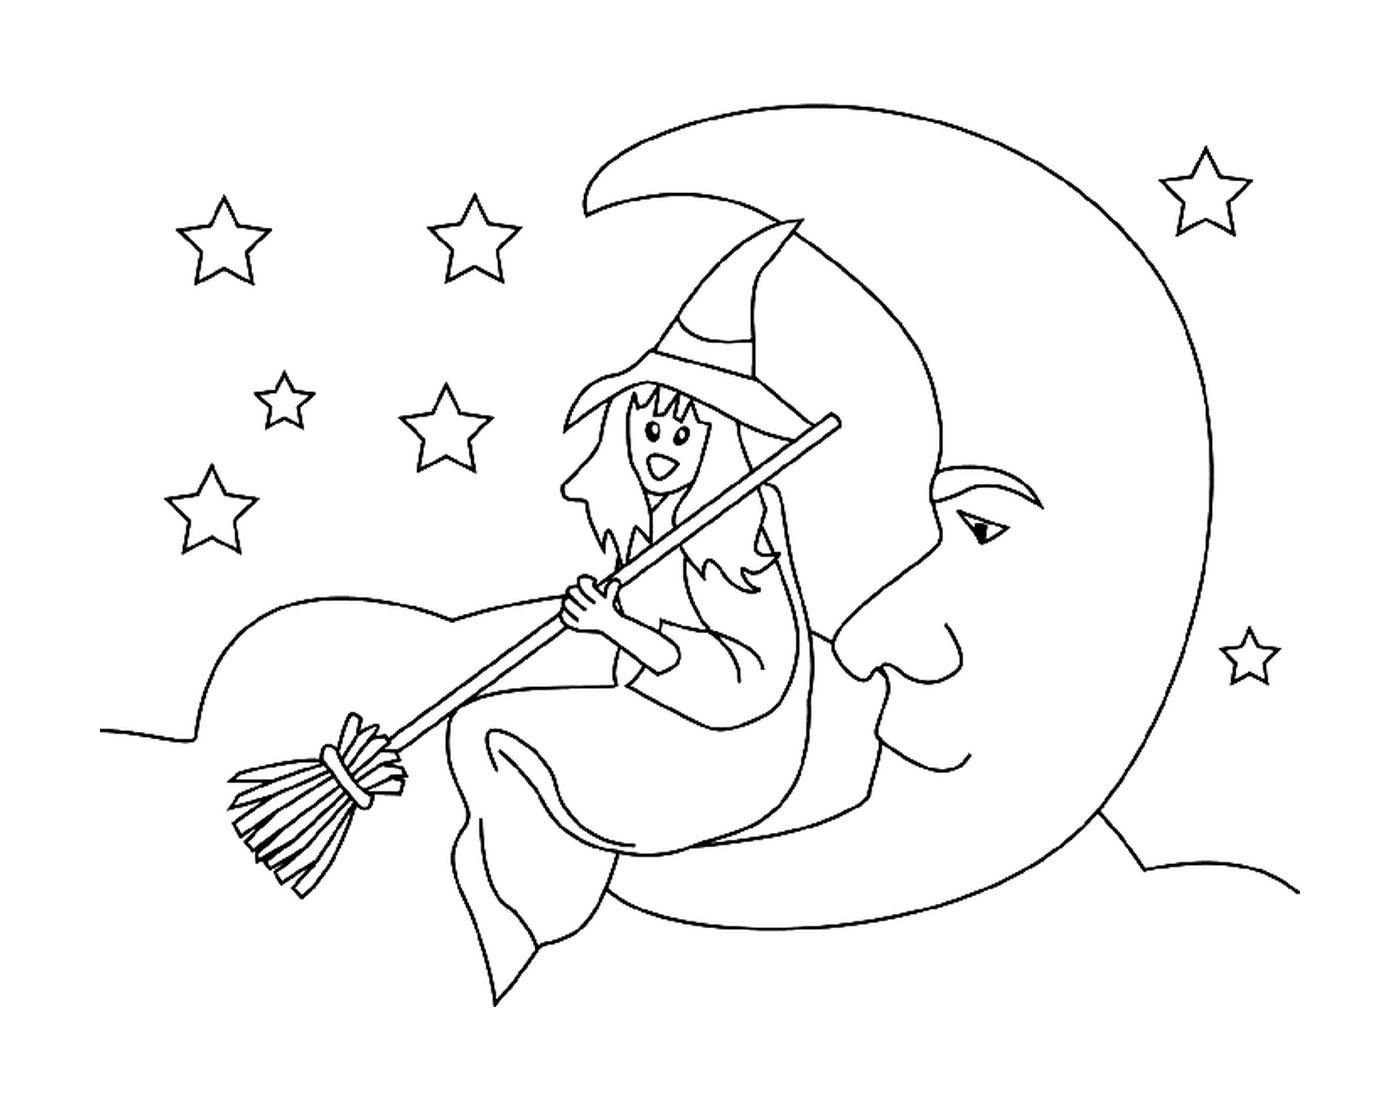  Ведьма сидит на луне и смотрит на звезды 